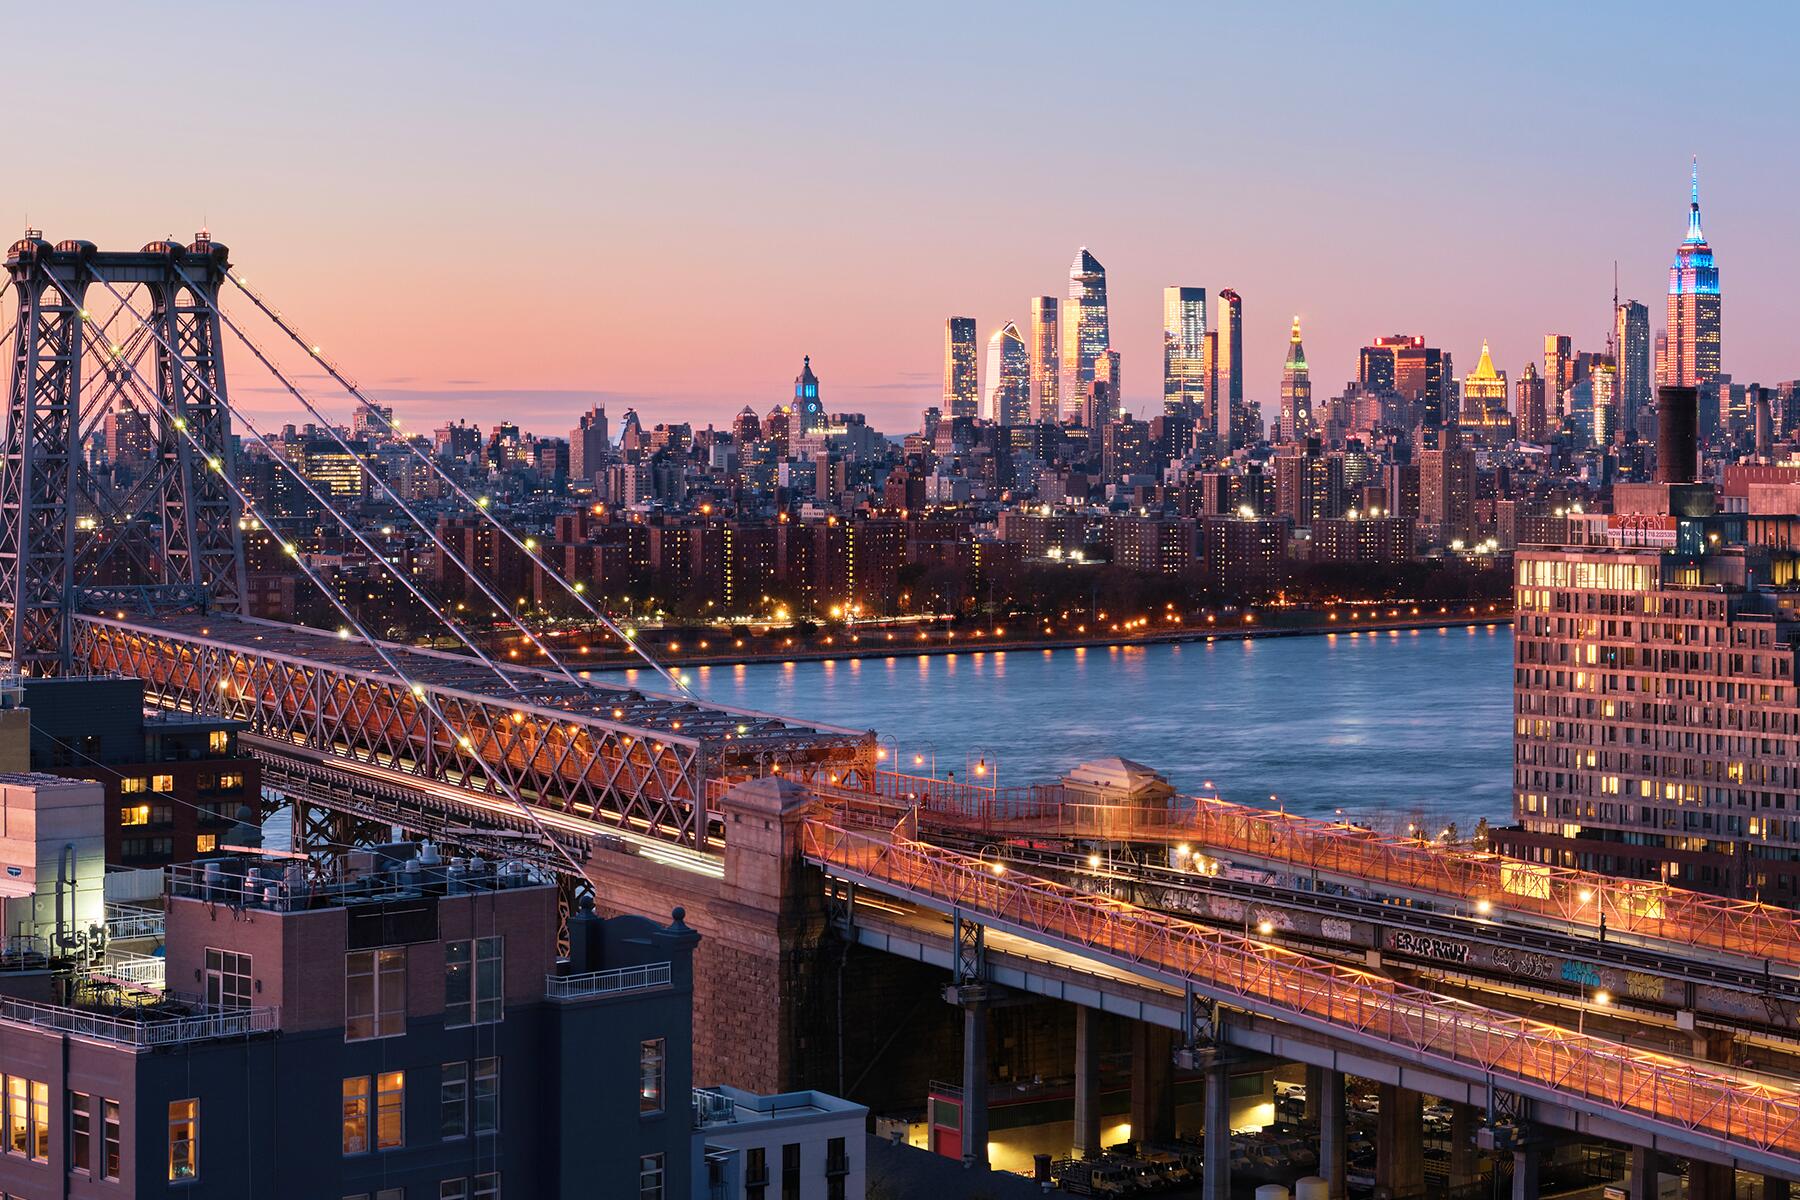 Pedestrian Bridges With the Best Views of New York City